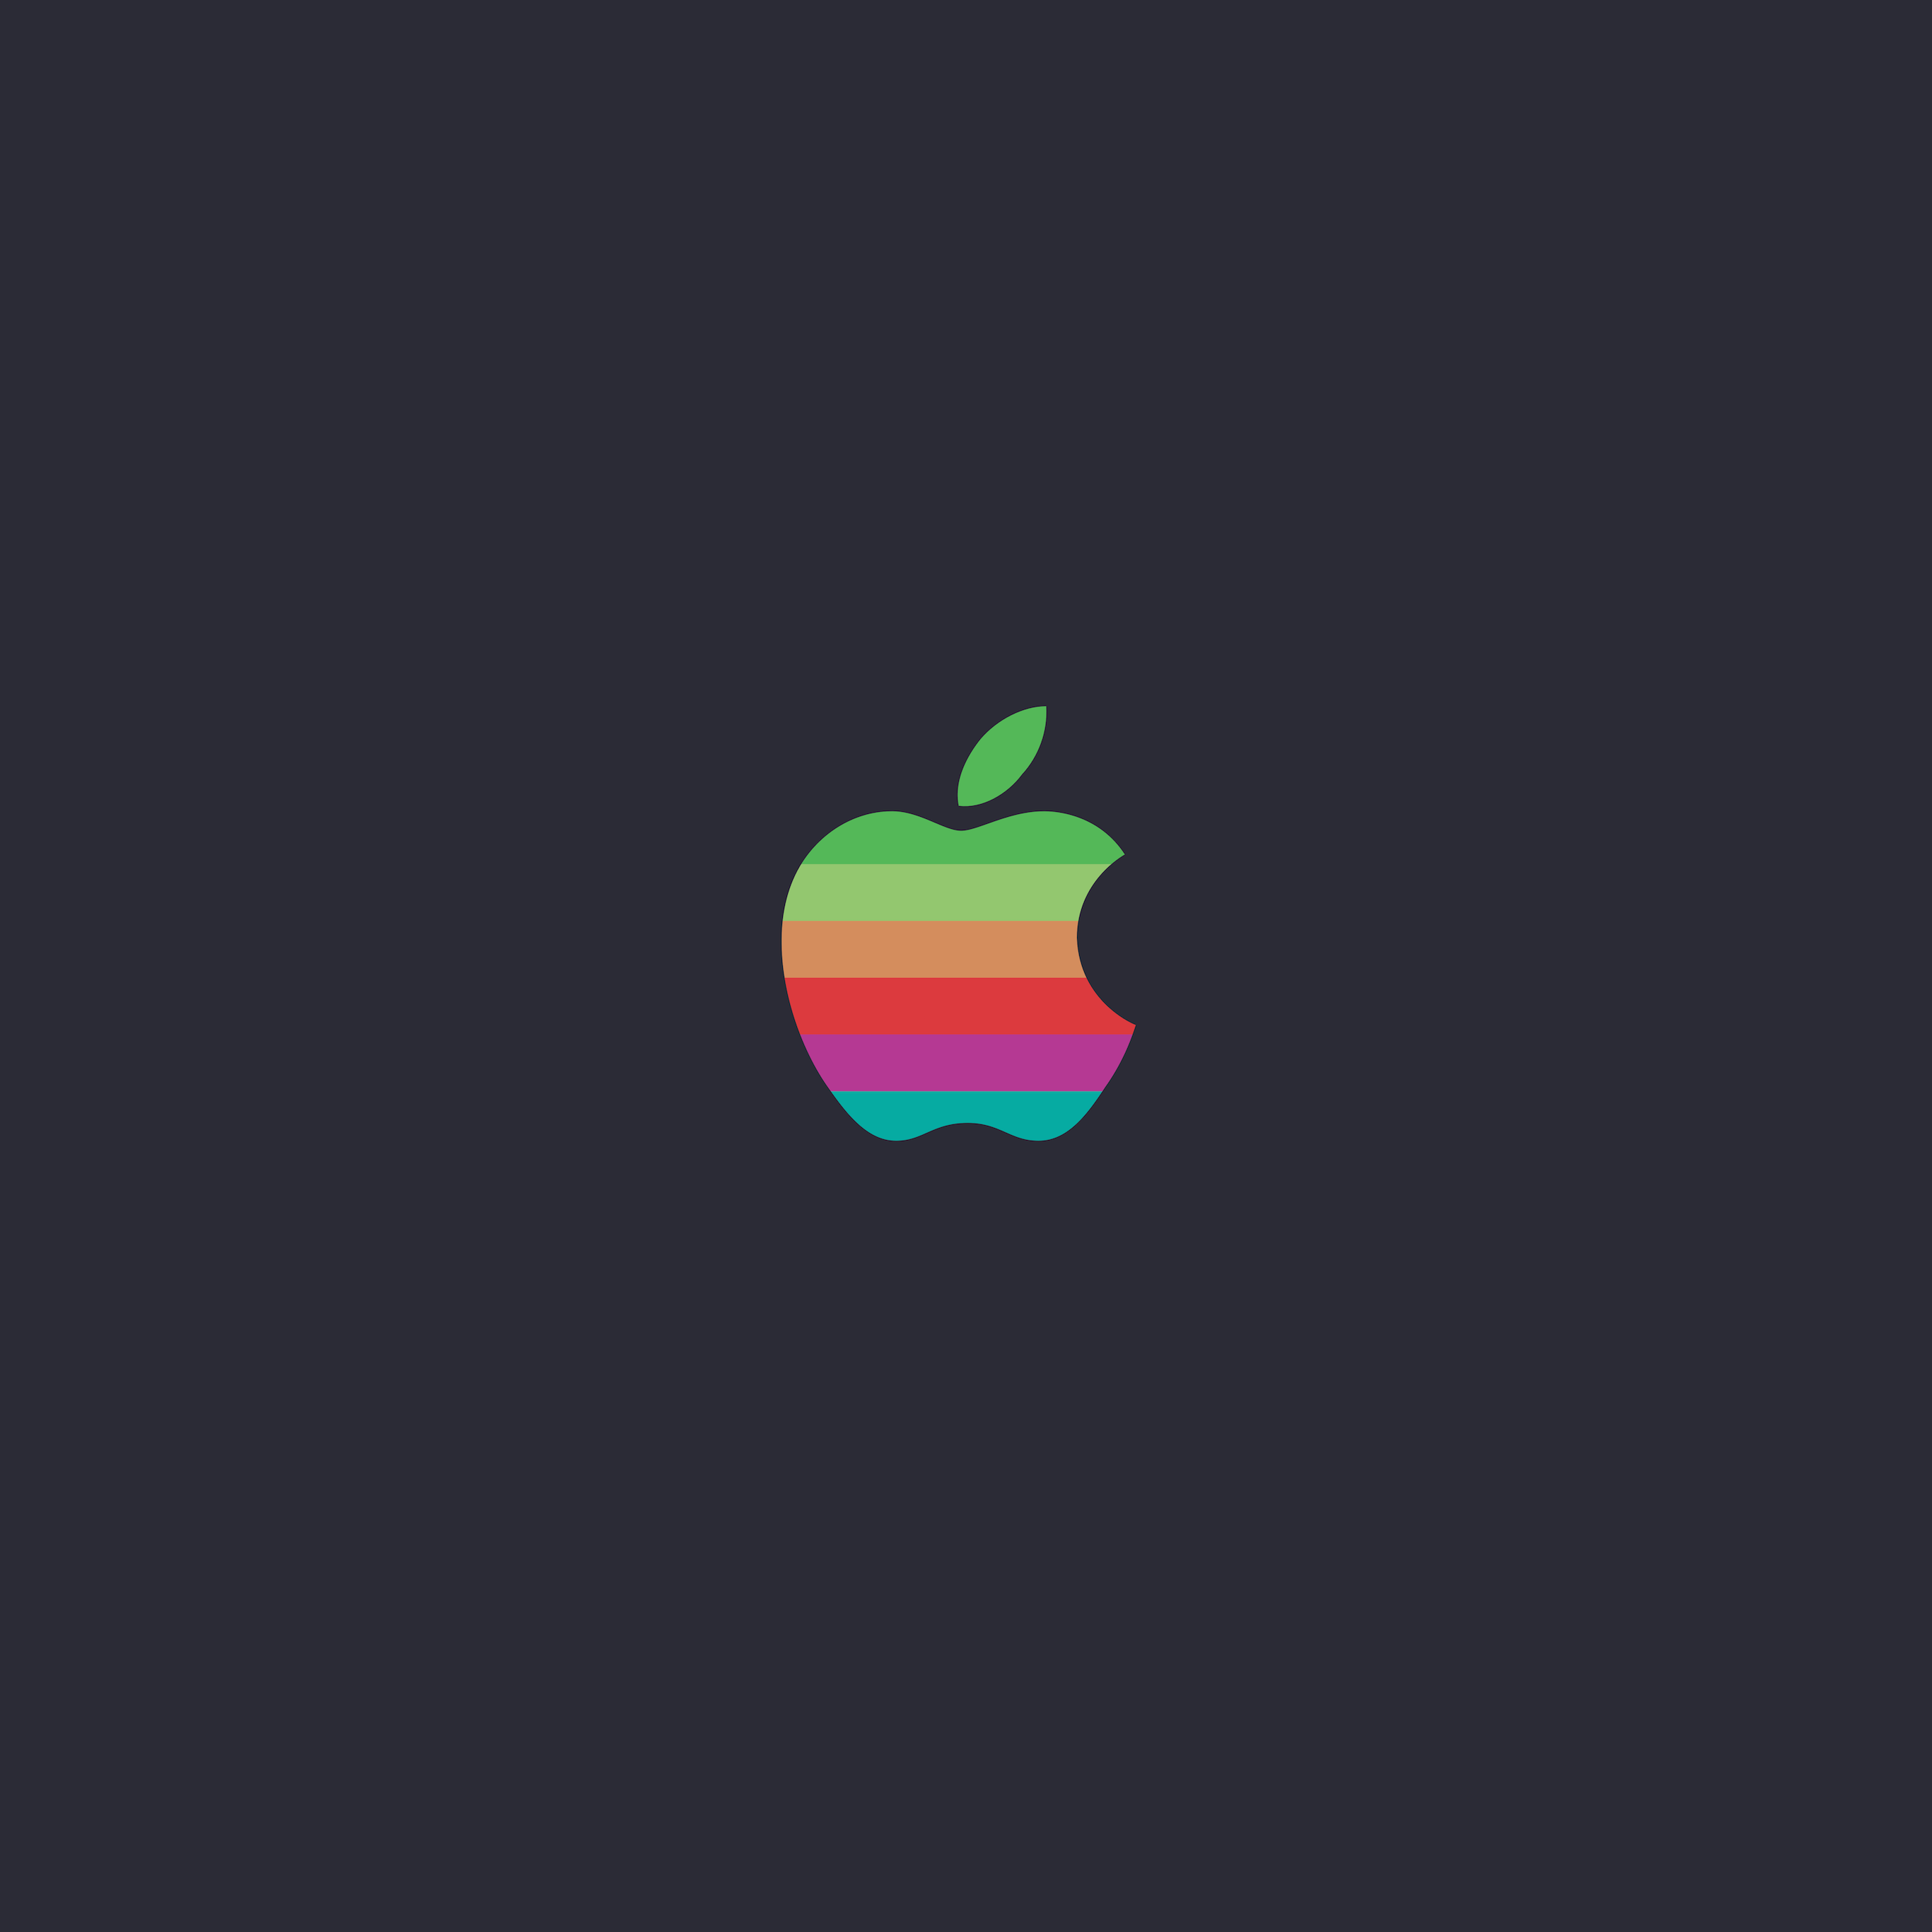 Retro Apple Logo Wallpaper Free Retro Apple Logo Background